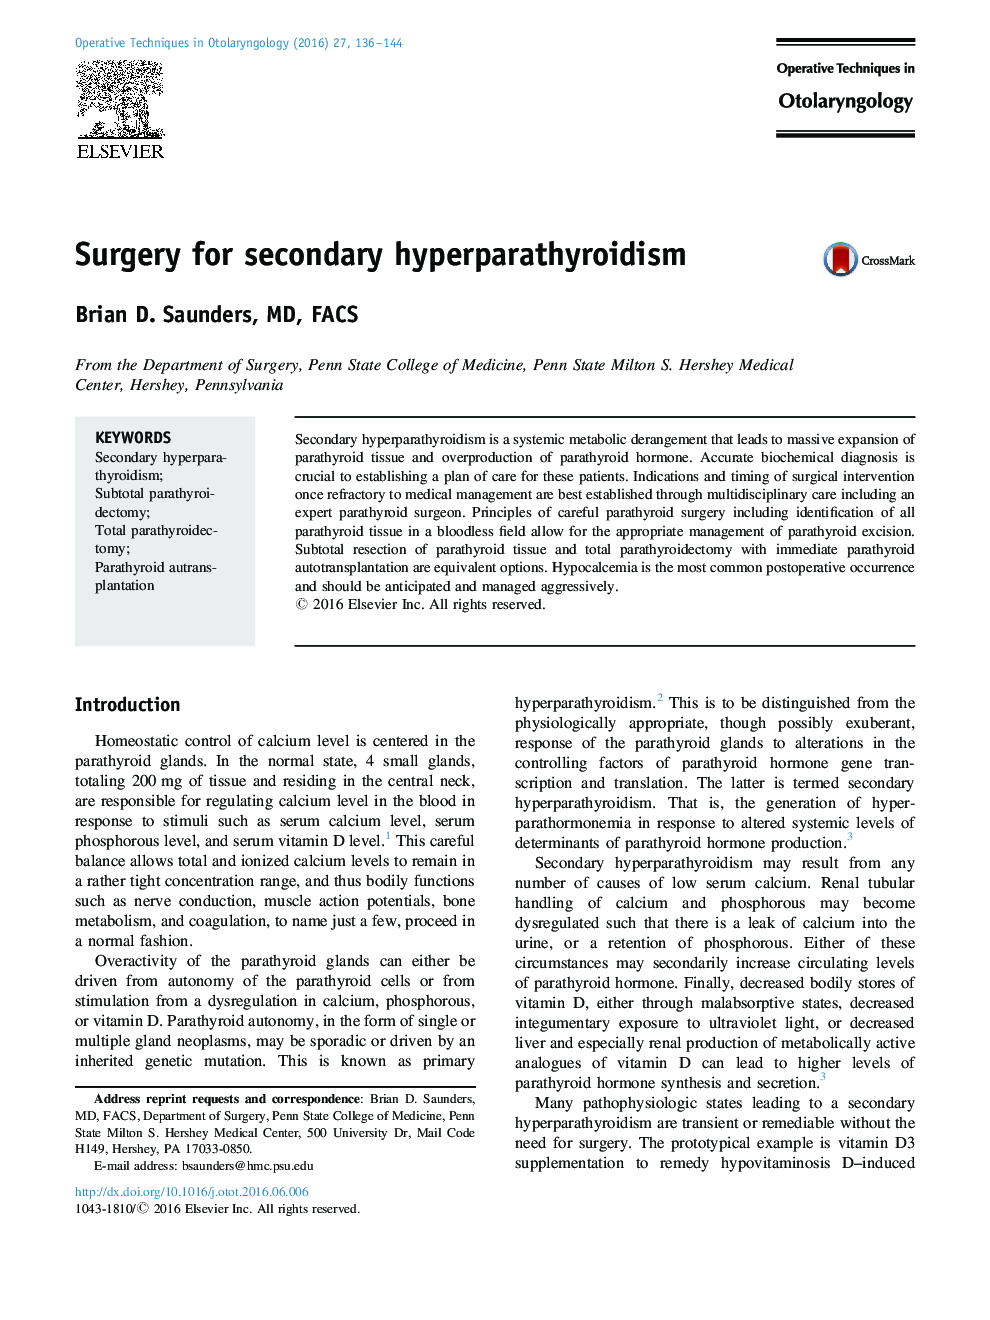 Surgery for secondary hyperparathyroidism